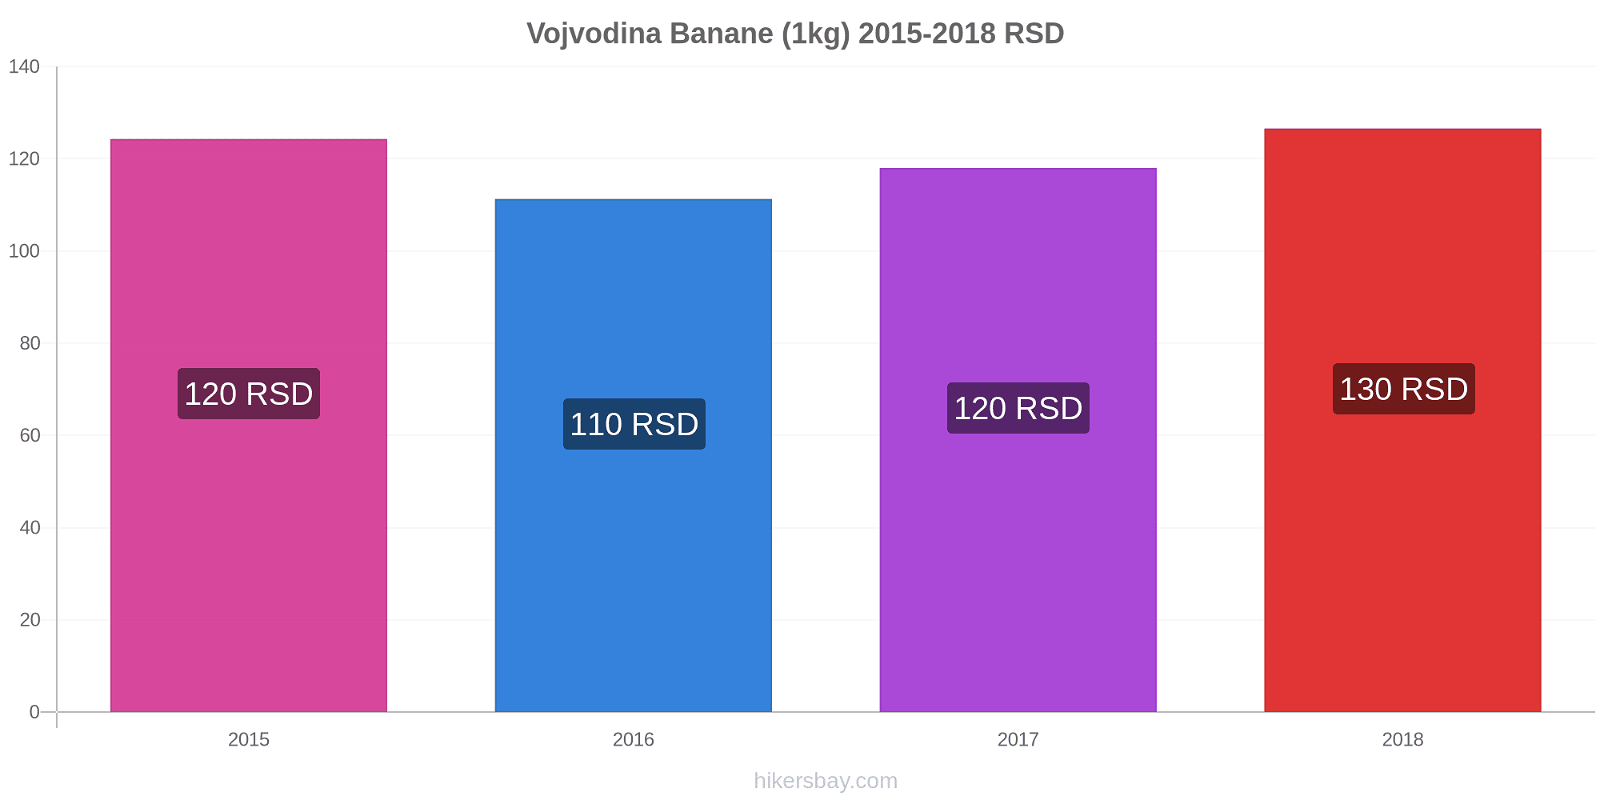 Vojvodina Preisänderungen Banane (1kg) hikersbay.com